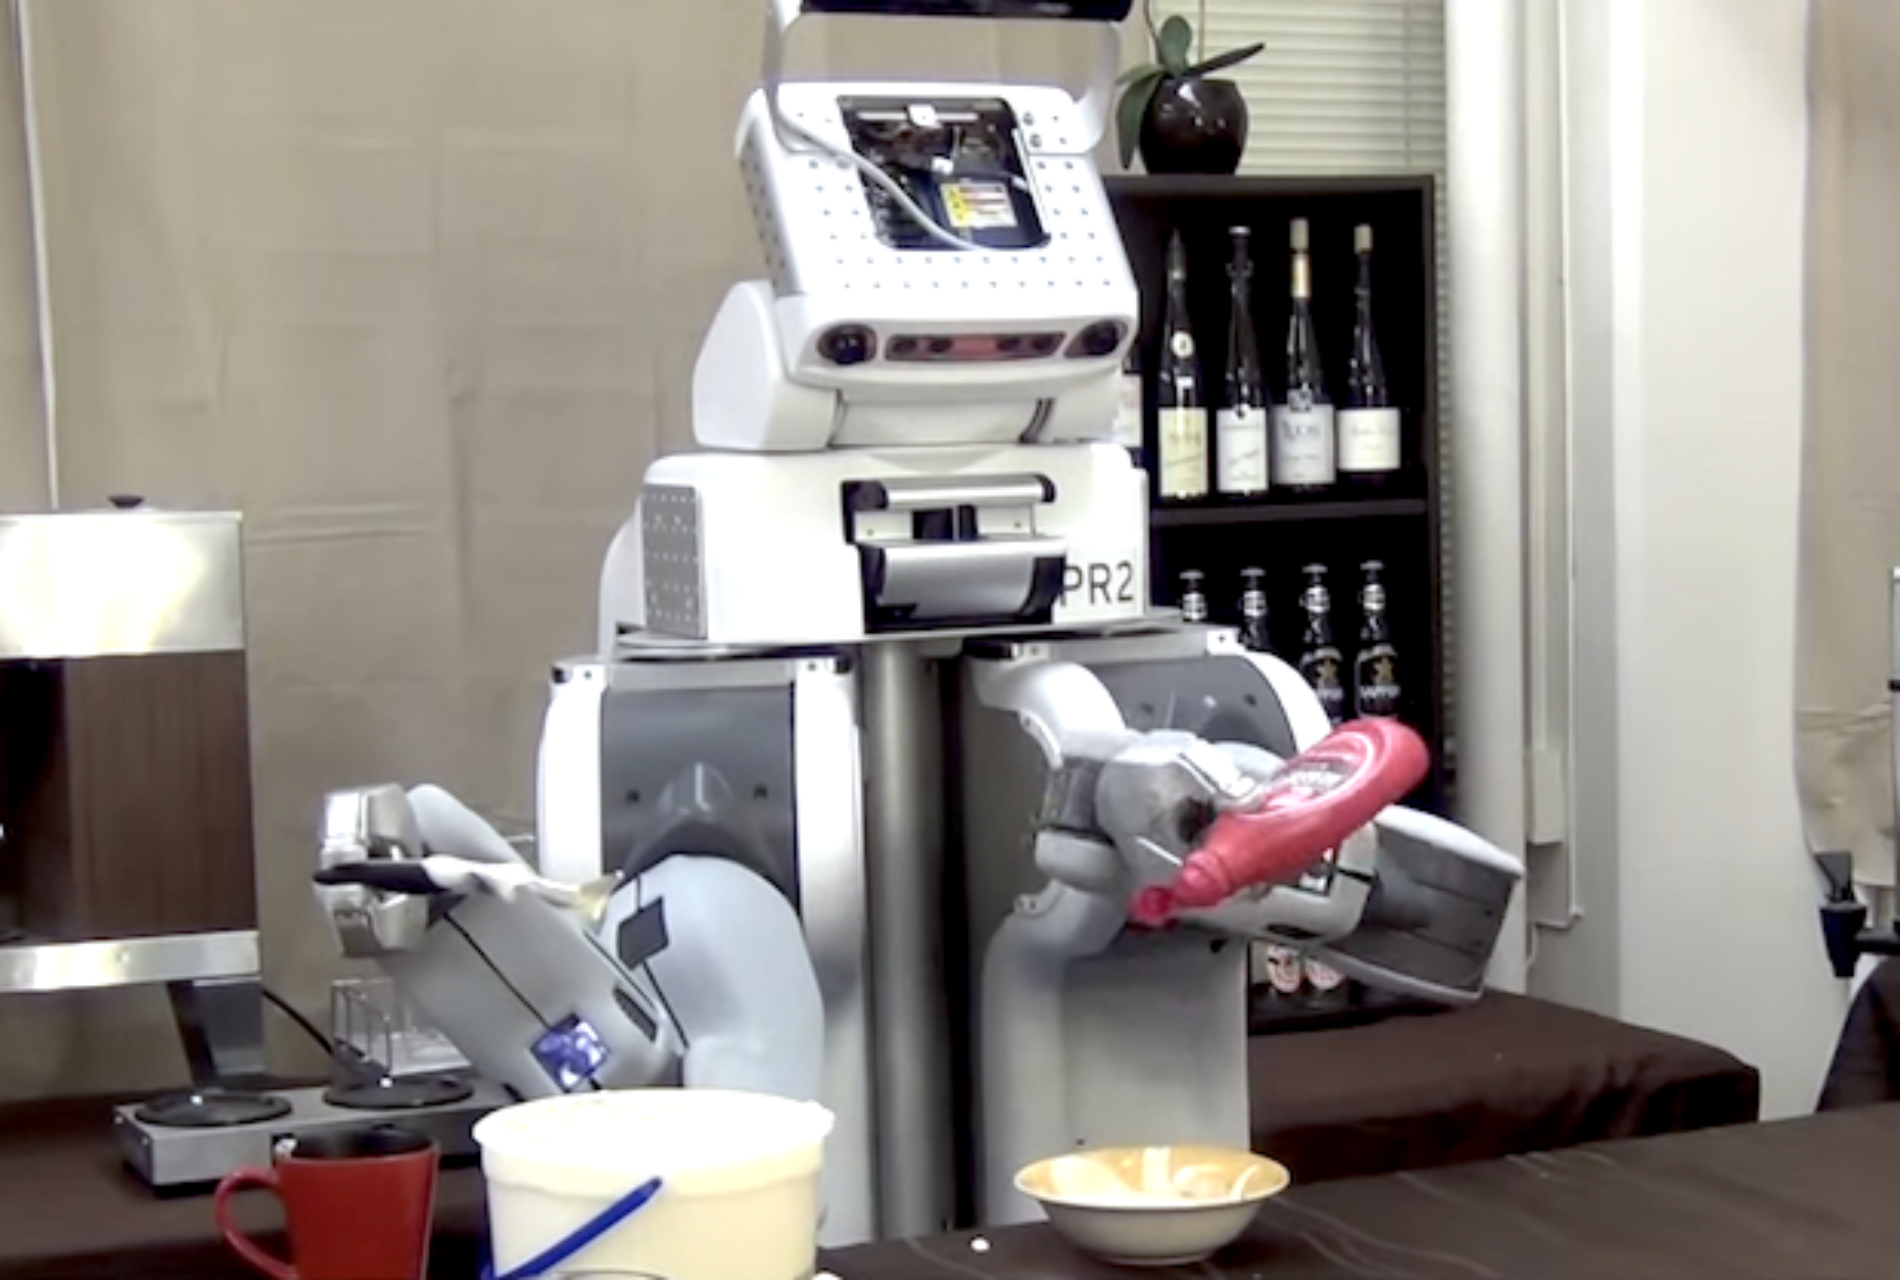 Robot Responds to Natural Language Instructions